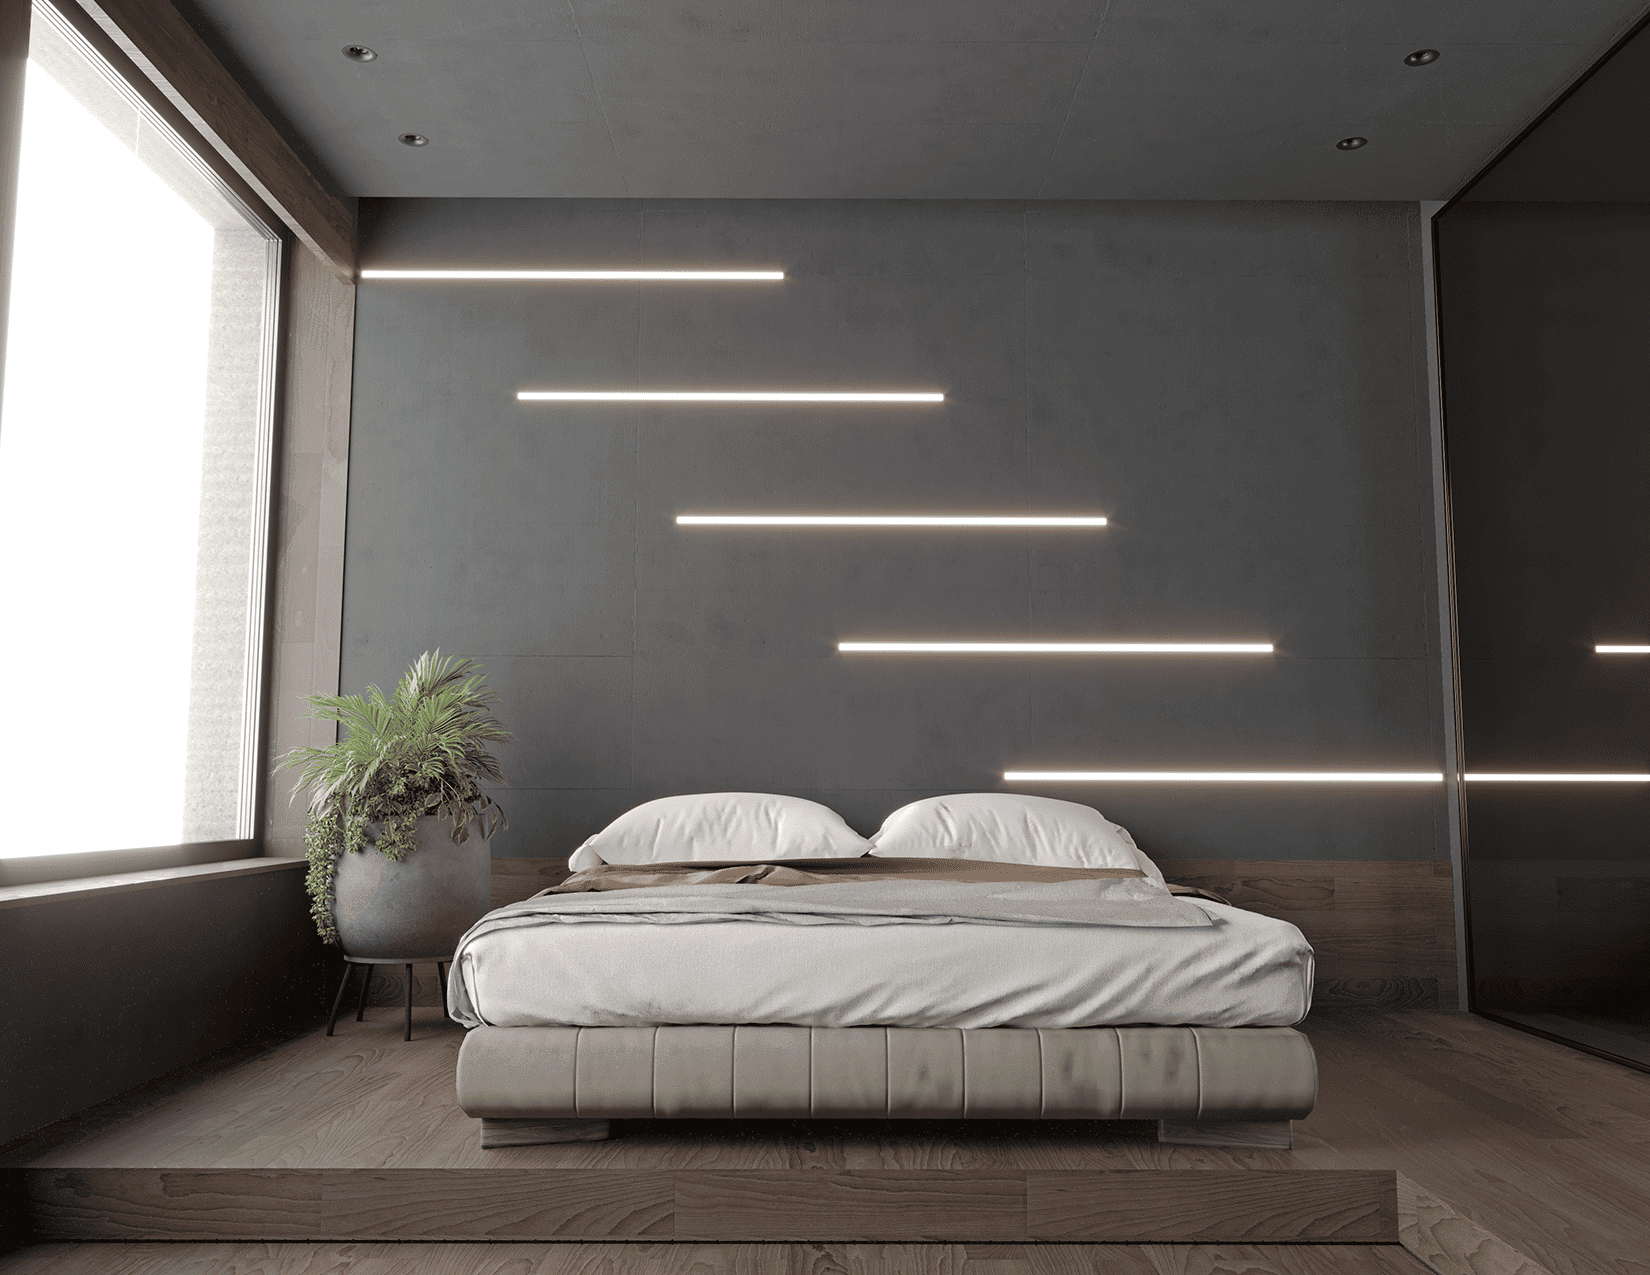 gallery - Bedroom recessed lighting